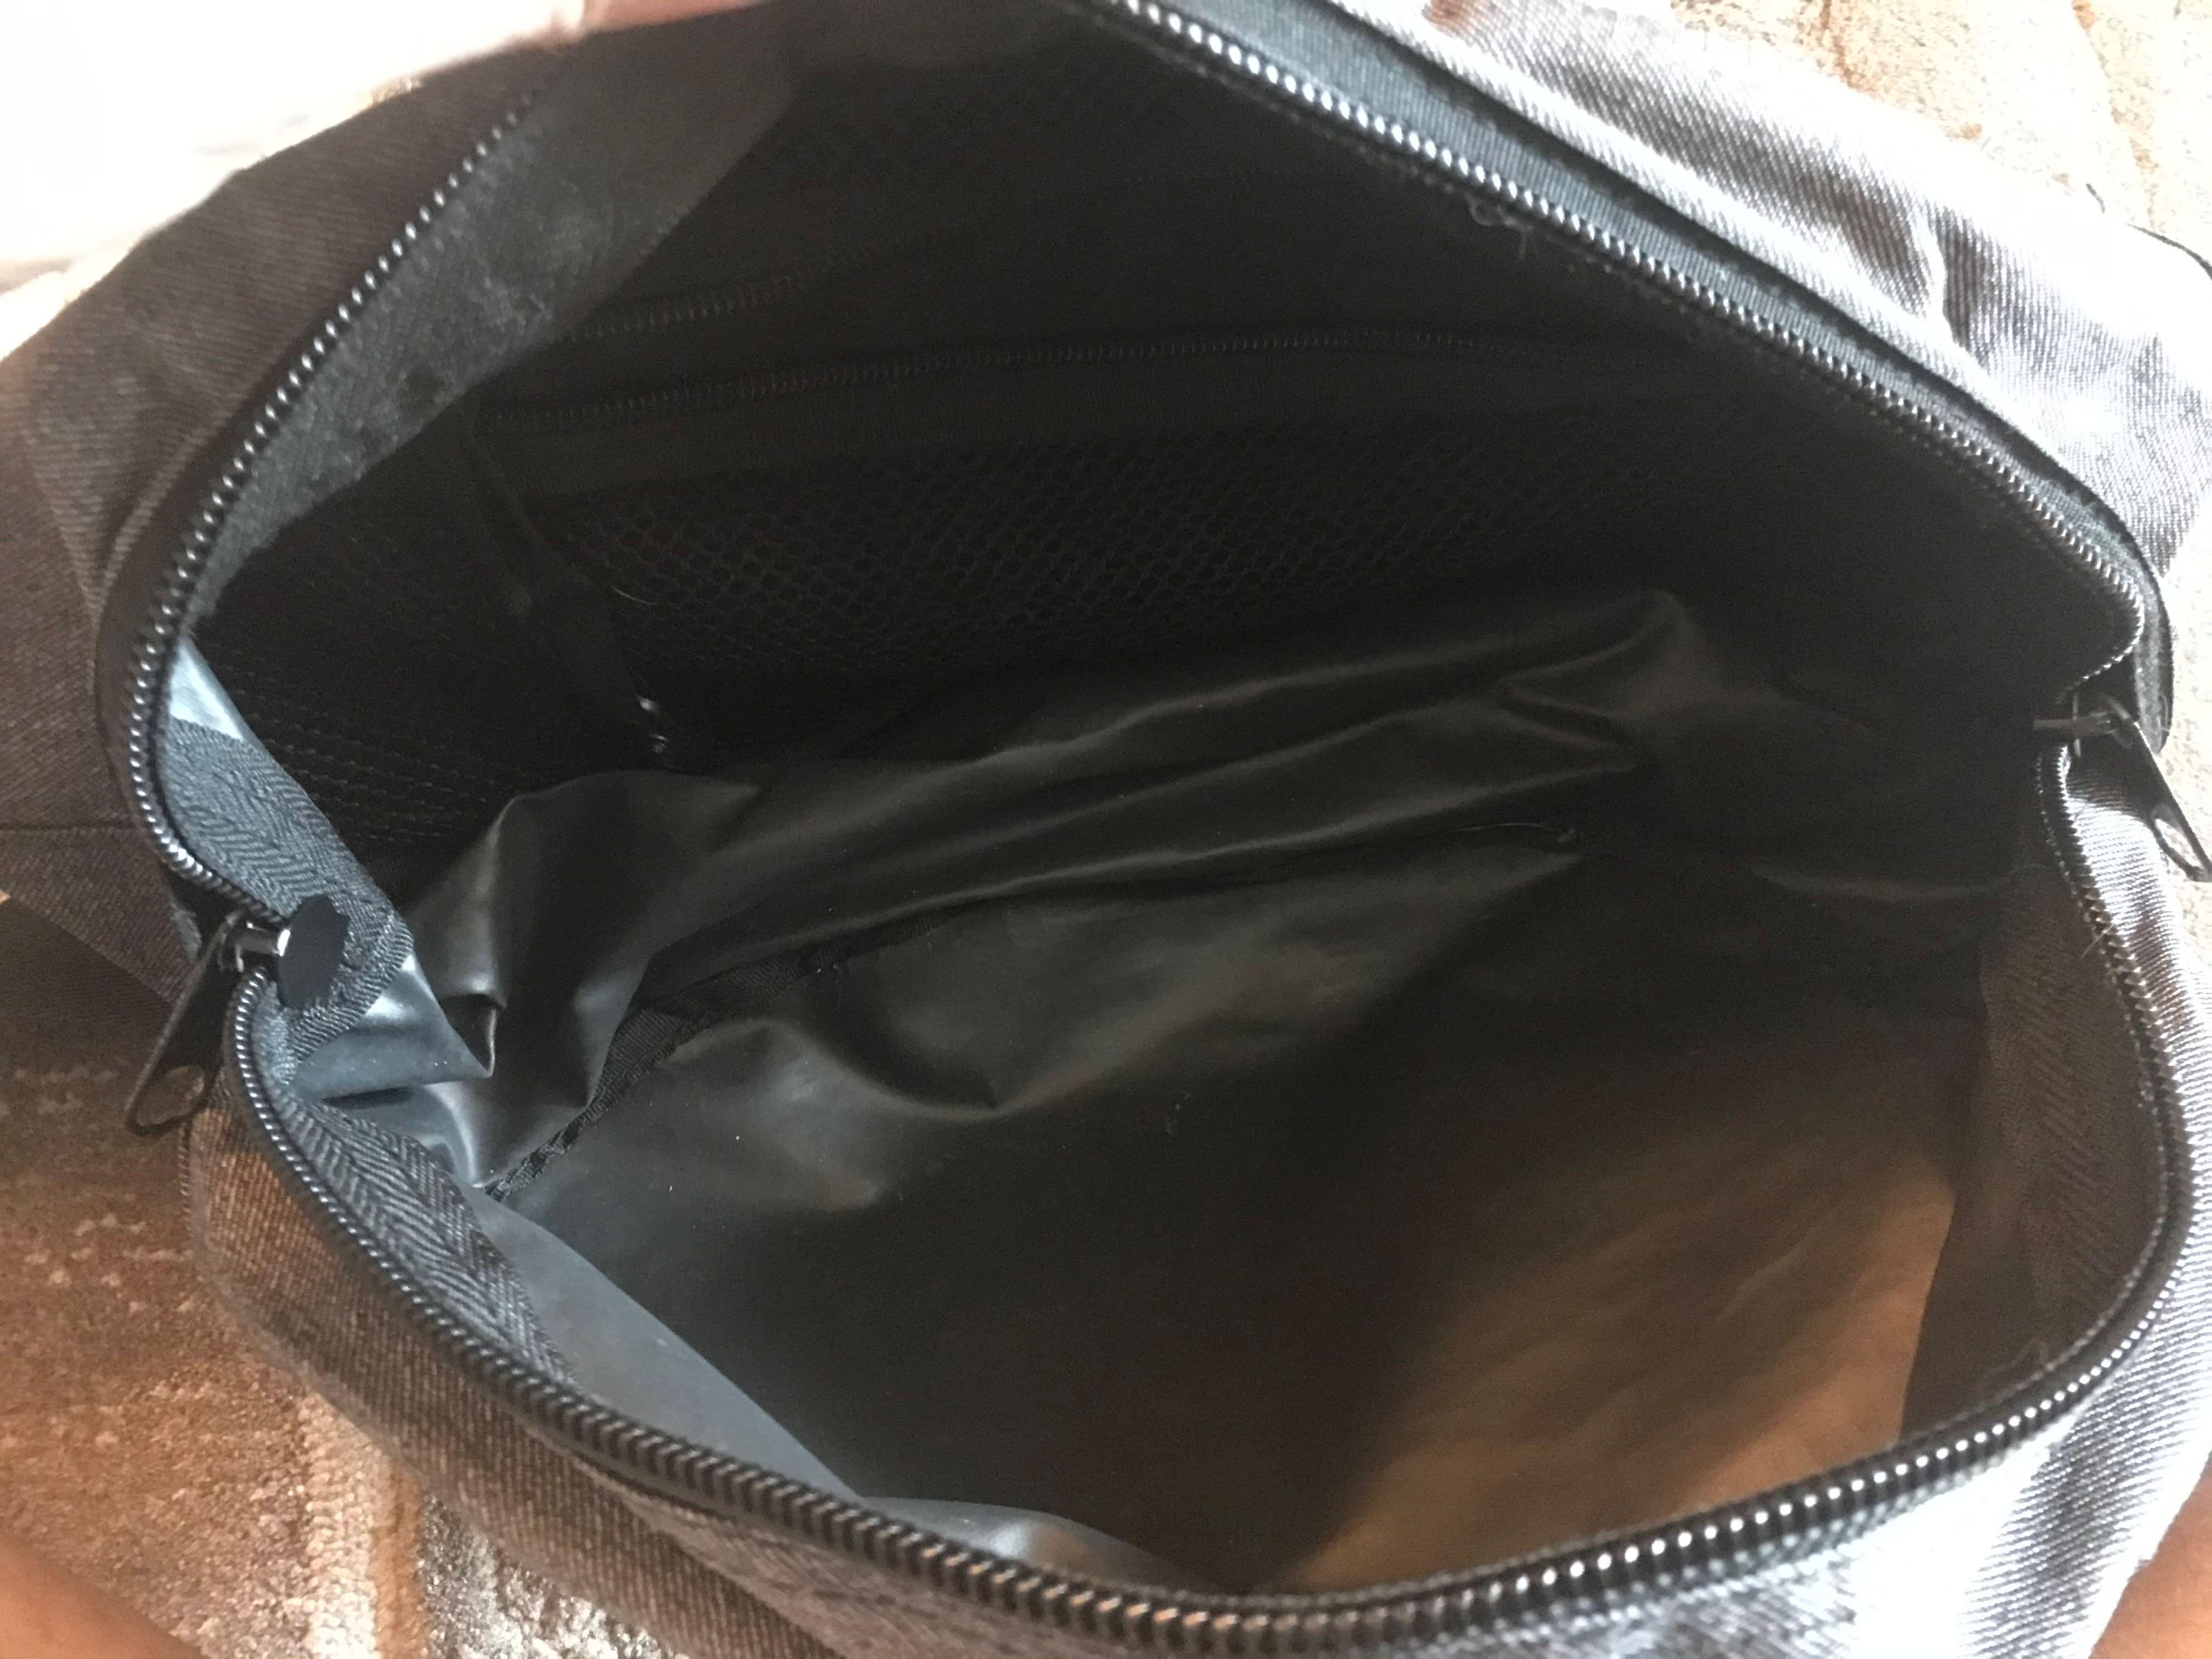 Raf Simons X Eastpak FW18 Sleek Sling Bag Review 